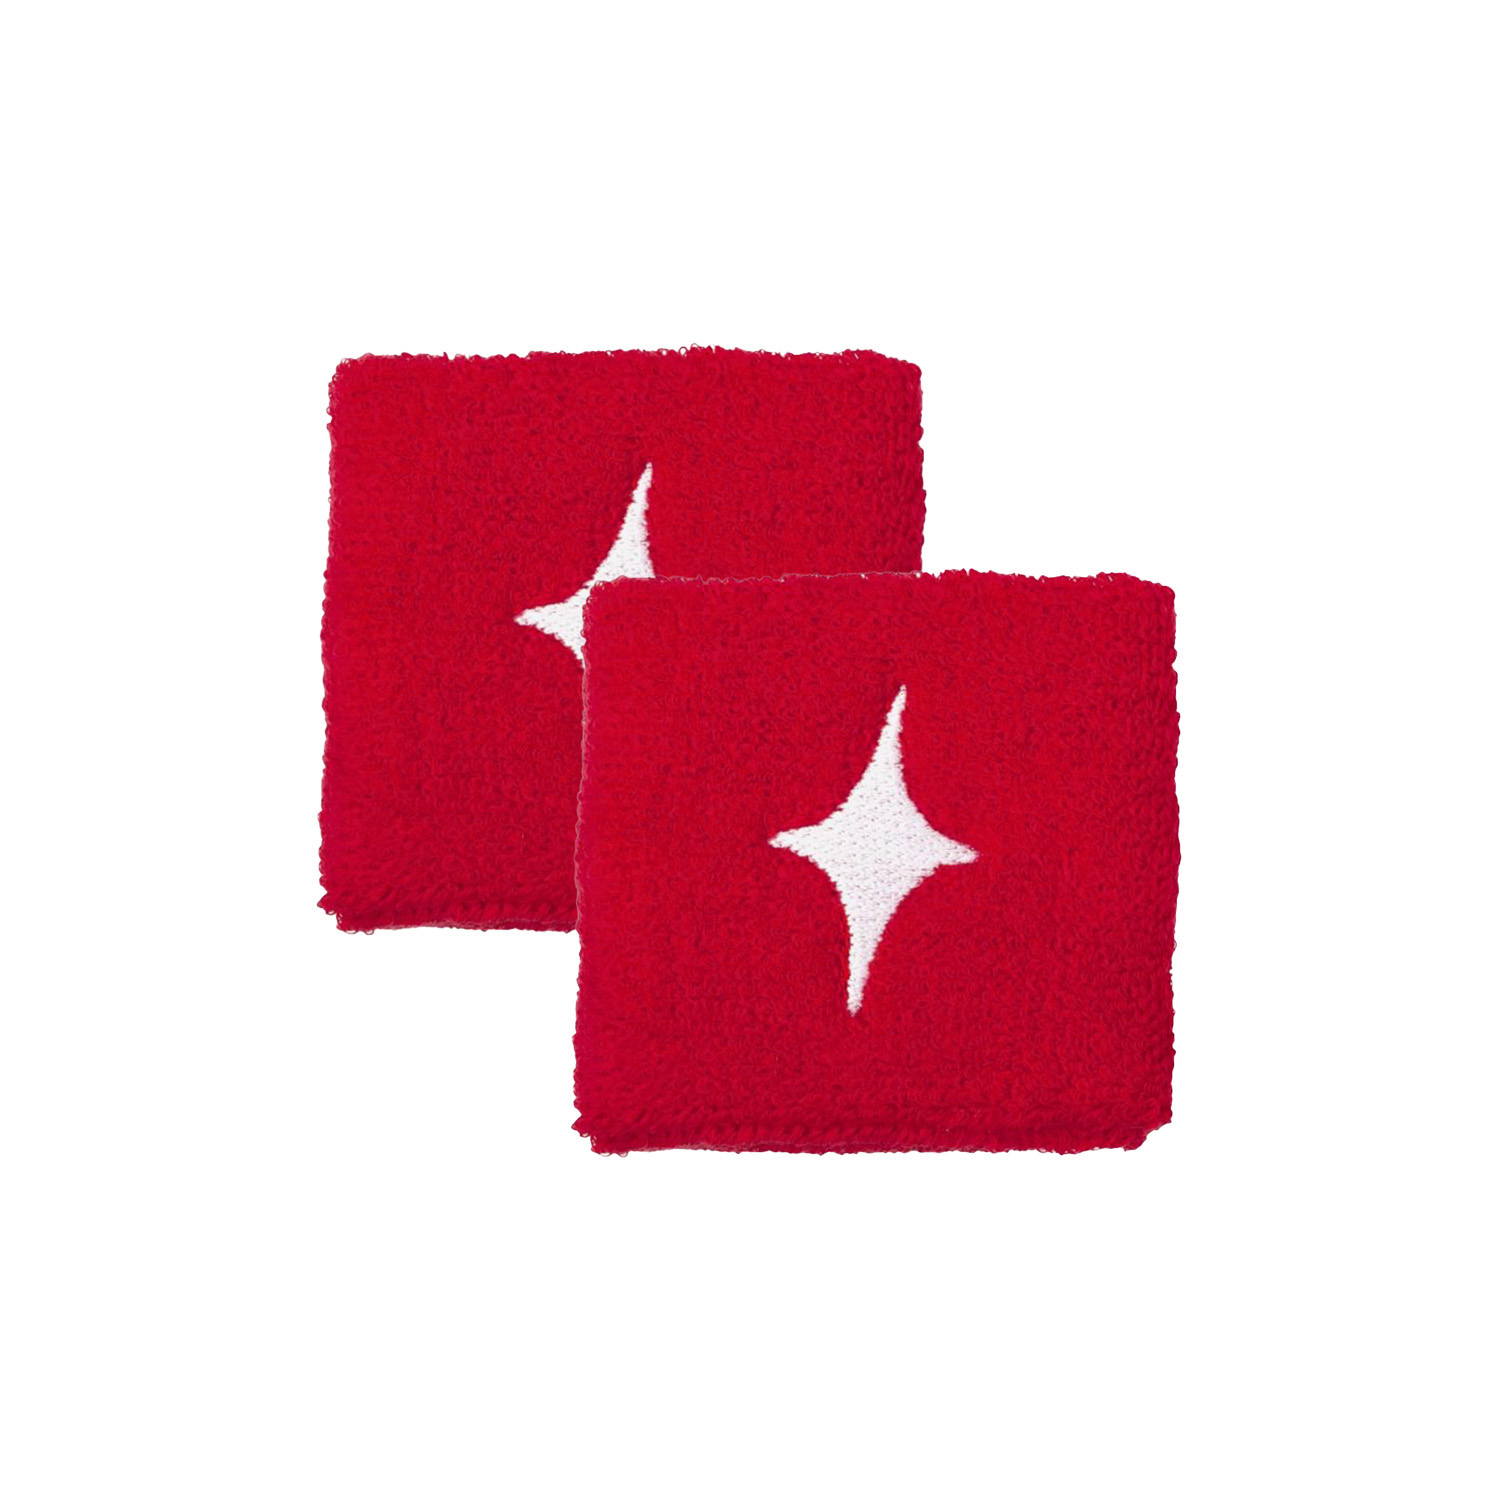 StarVie Logo Small Wristbands - Red/White Star